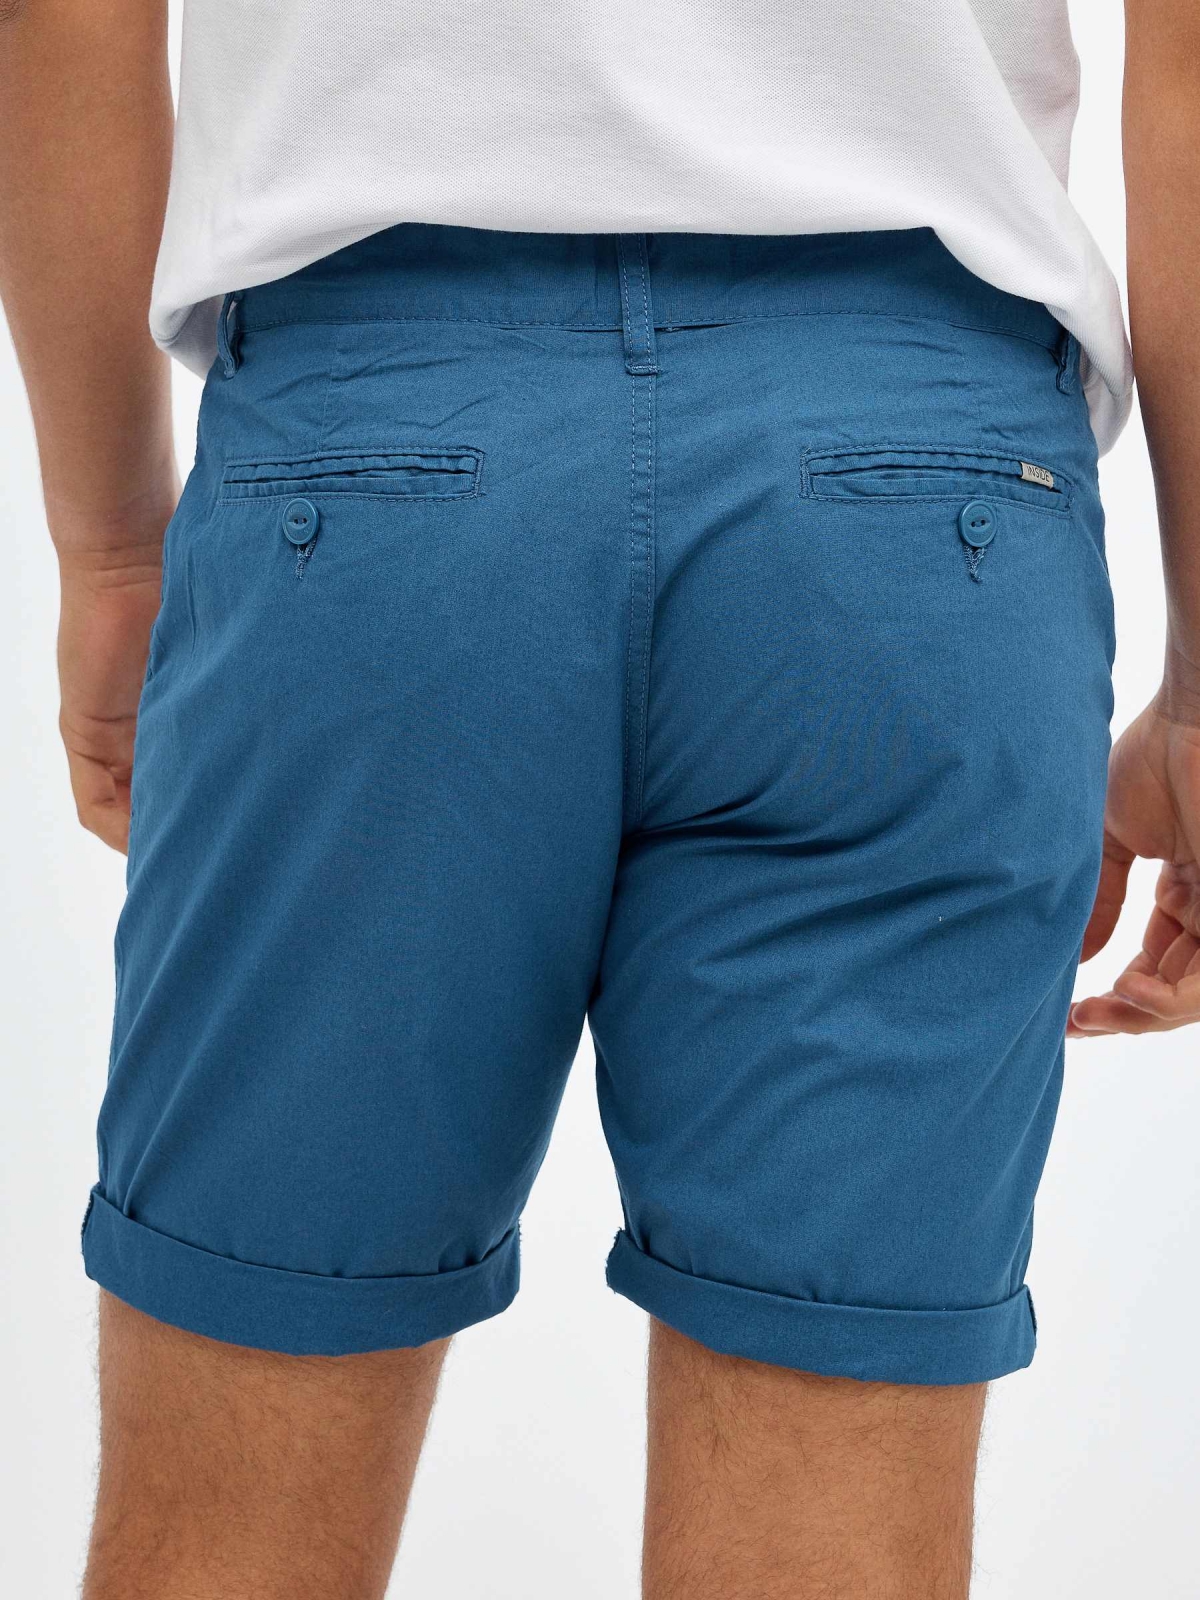 Poplin shorts blue detail view